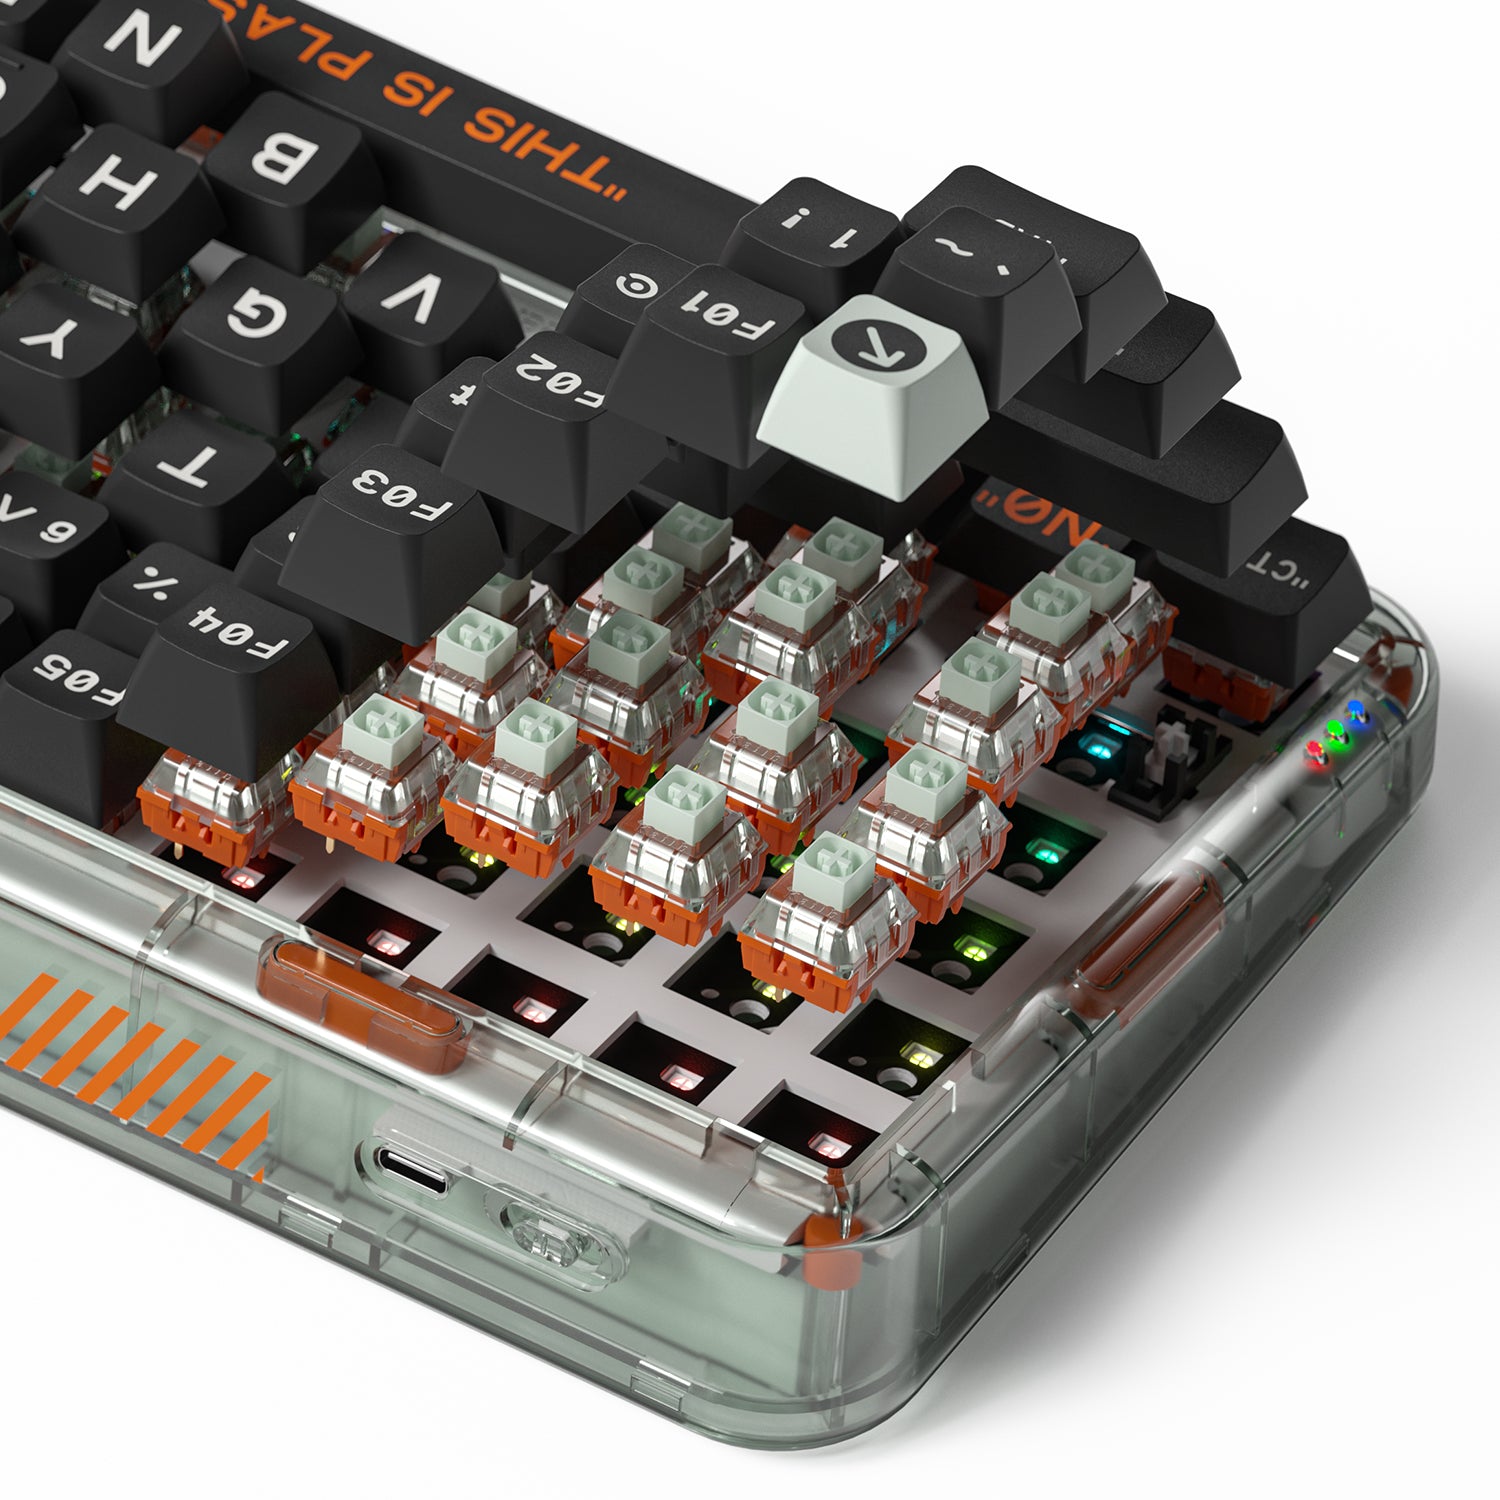 MelGeek Mojo84 Plastic Advance Mechanical Keyboard